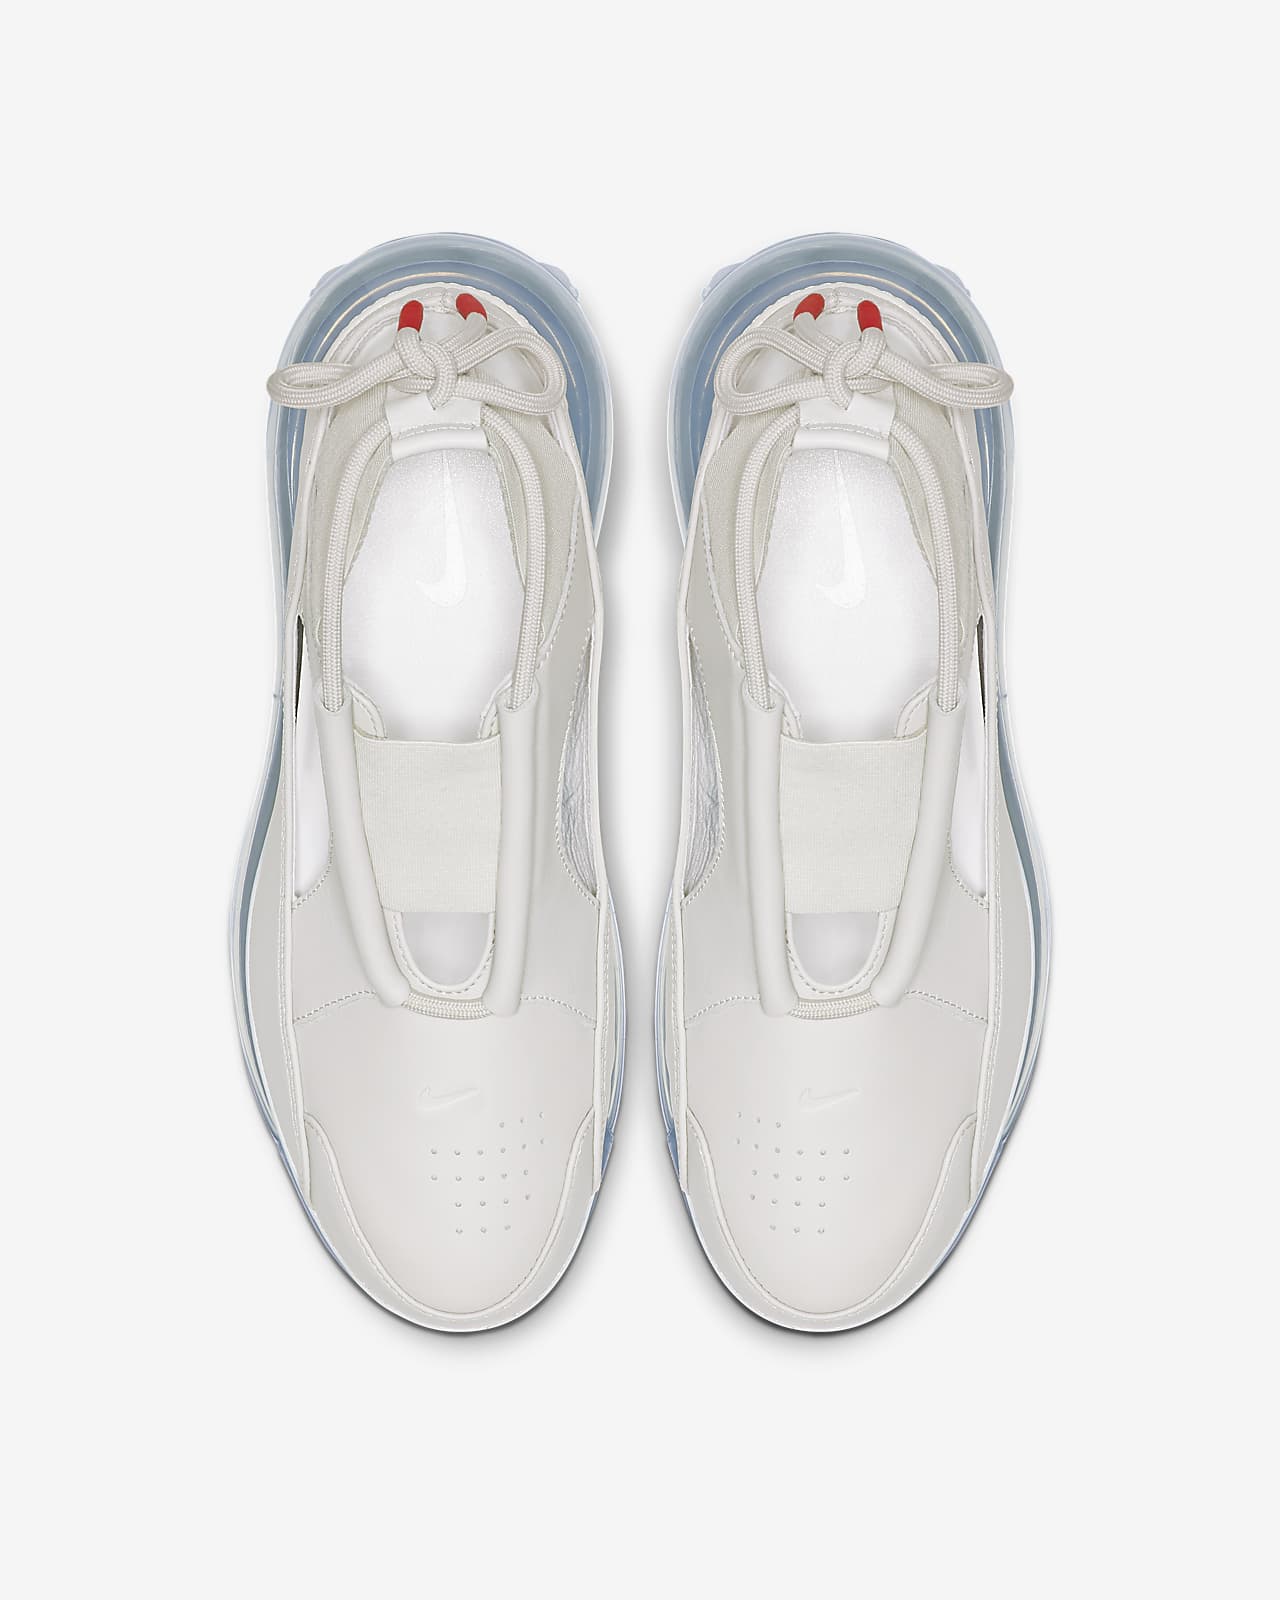 Nike Air Max FF 720 Women's Shoe